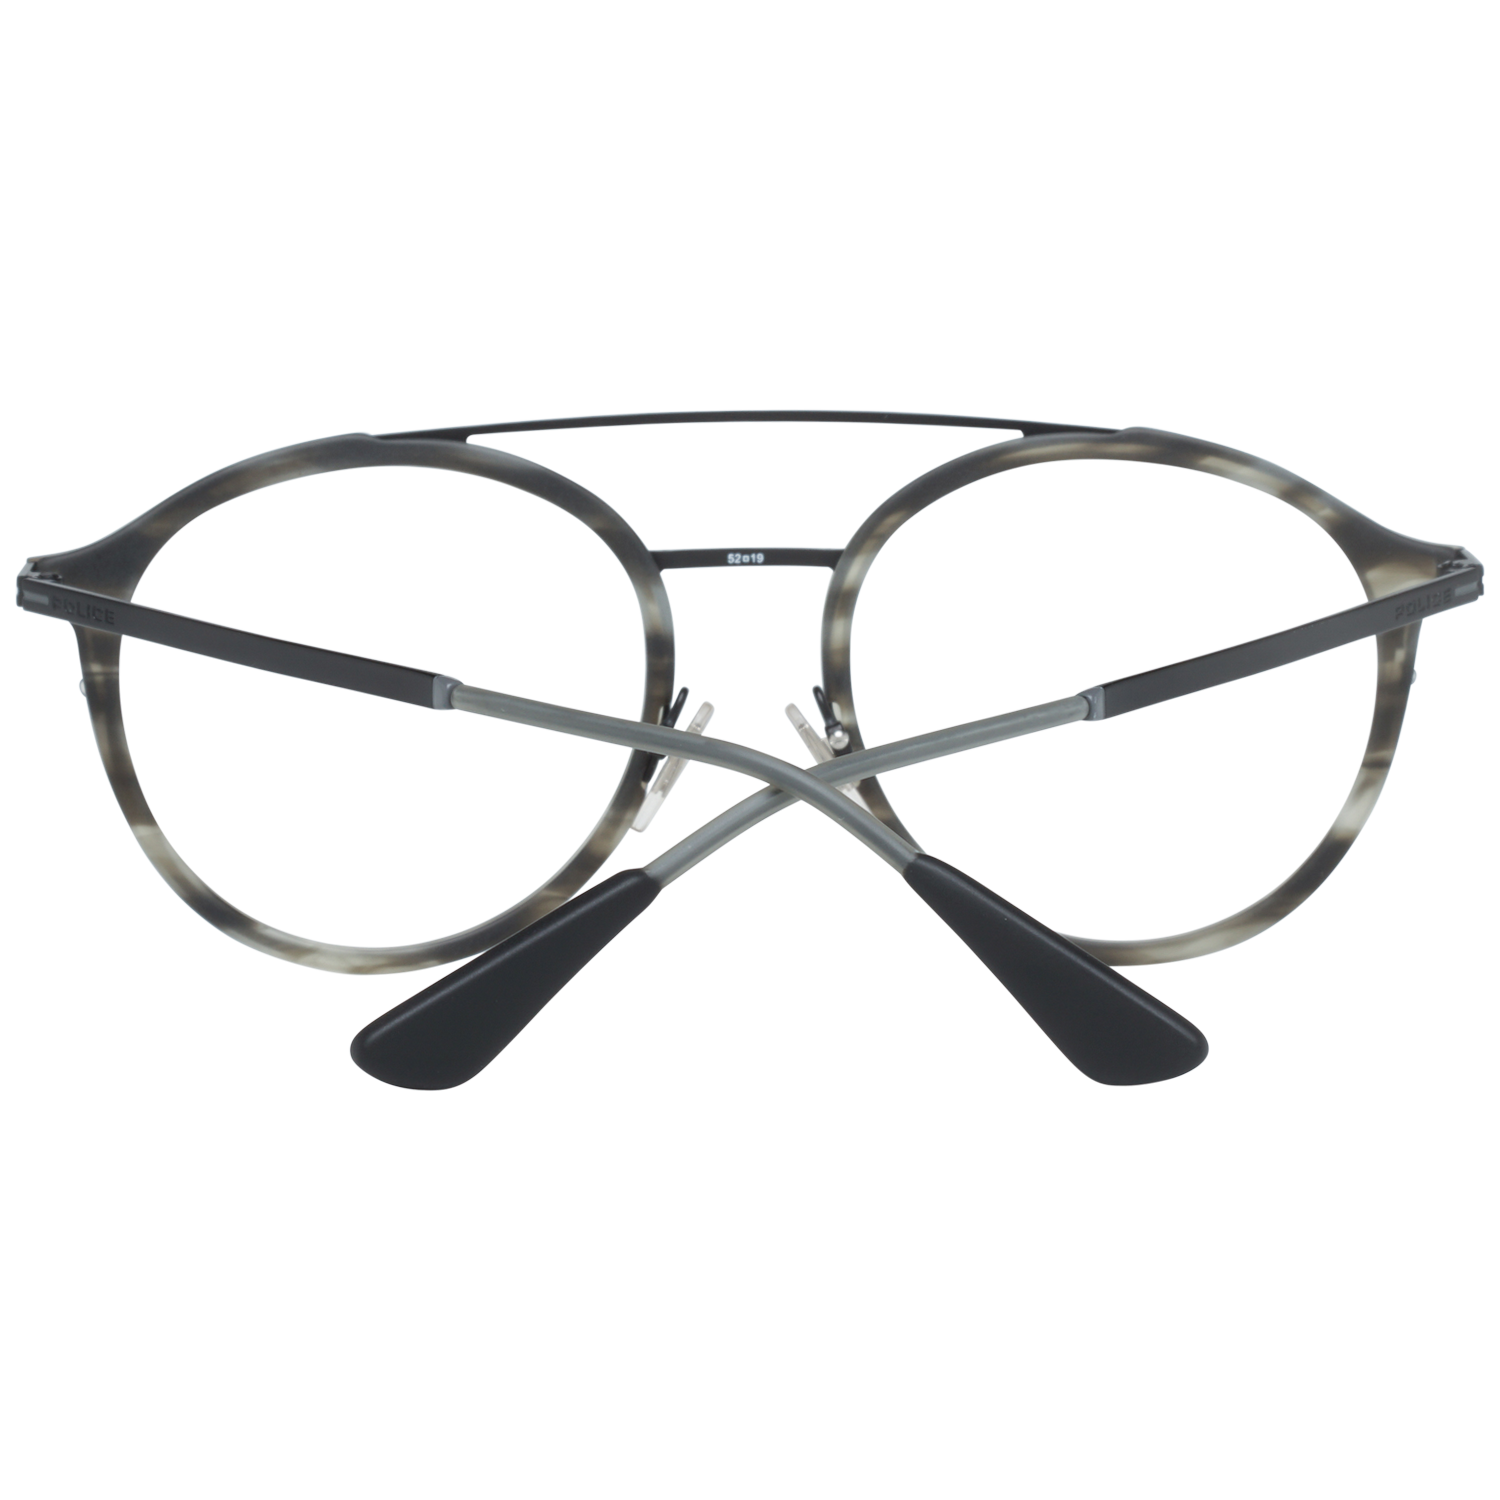 Police Frames Police Glasses Frames VPL688 4ATM 52 Eyeglasses Eyewear UK USA Australia 